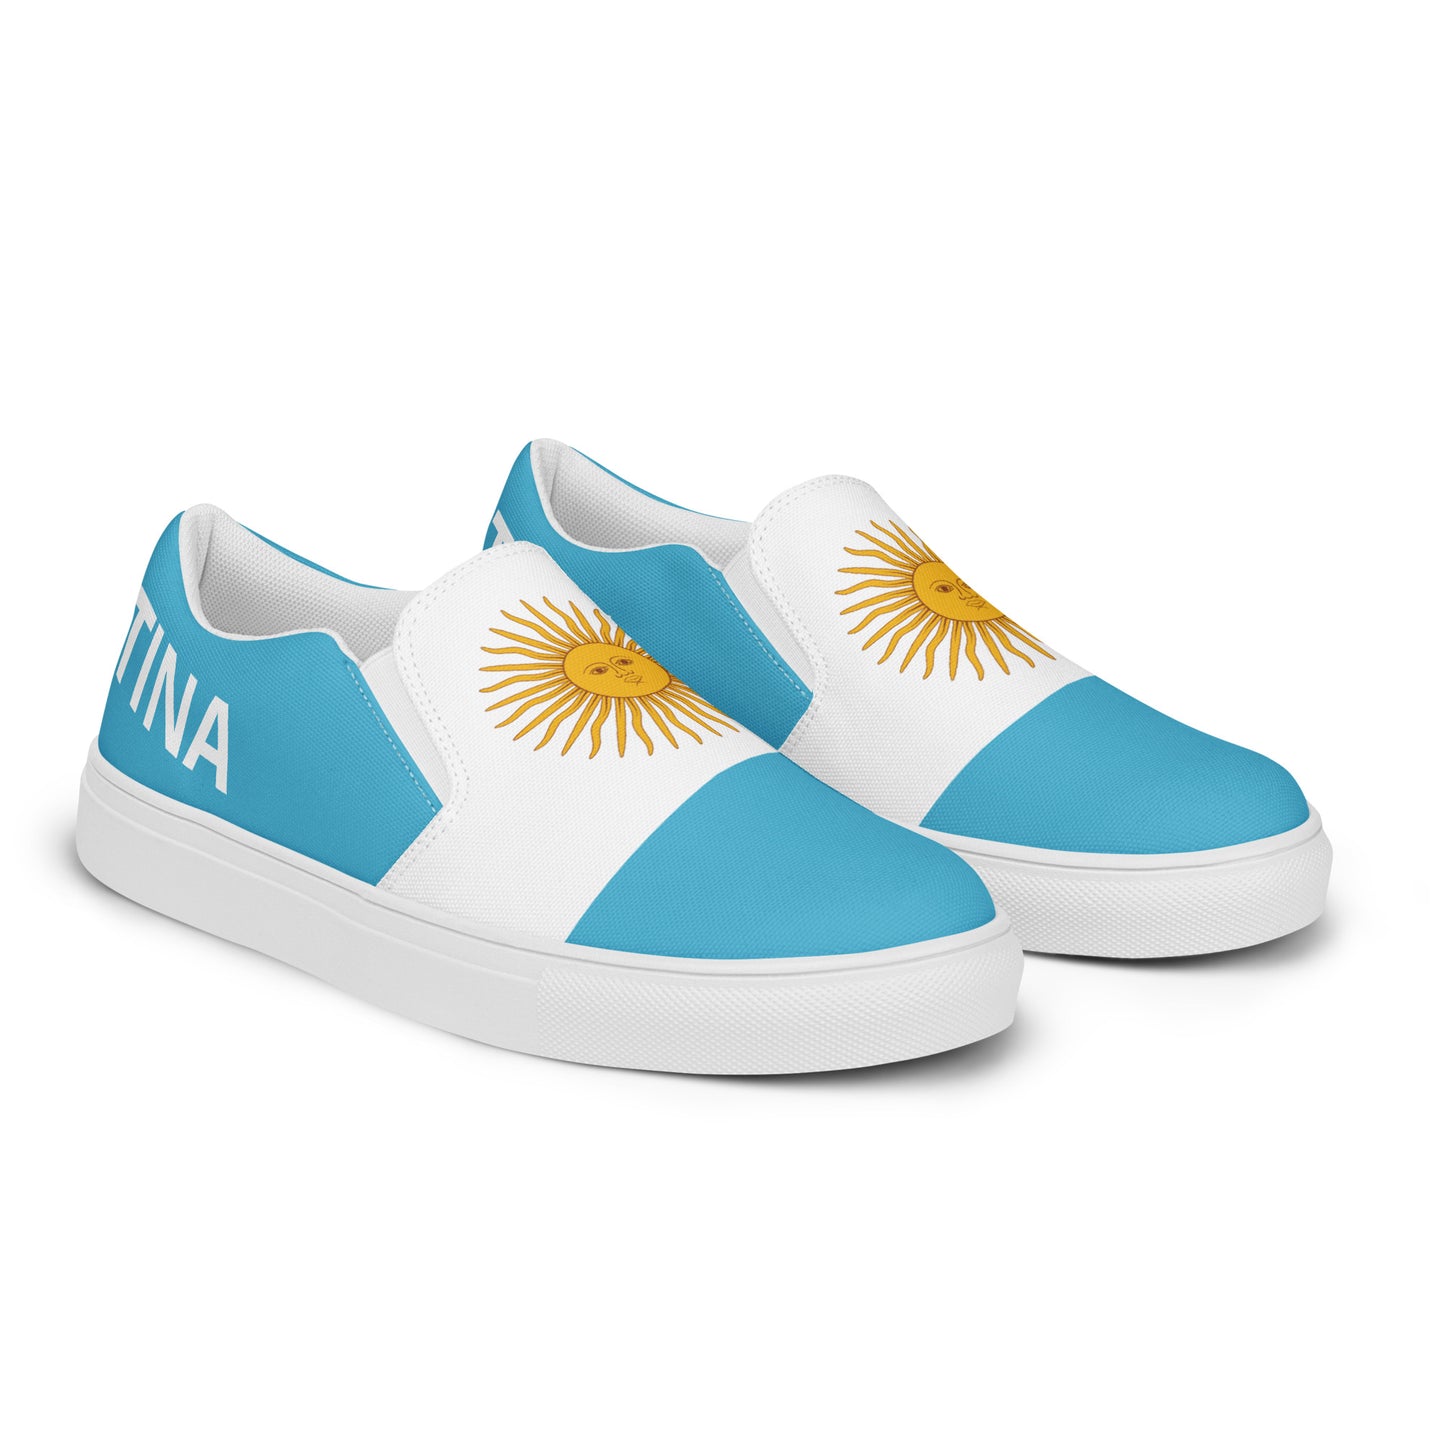 Argentina - Women - Bandera - Slip-on shoes